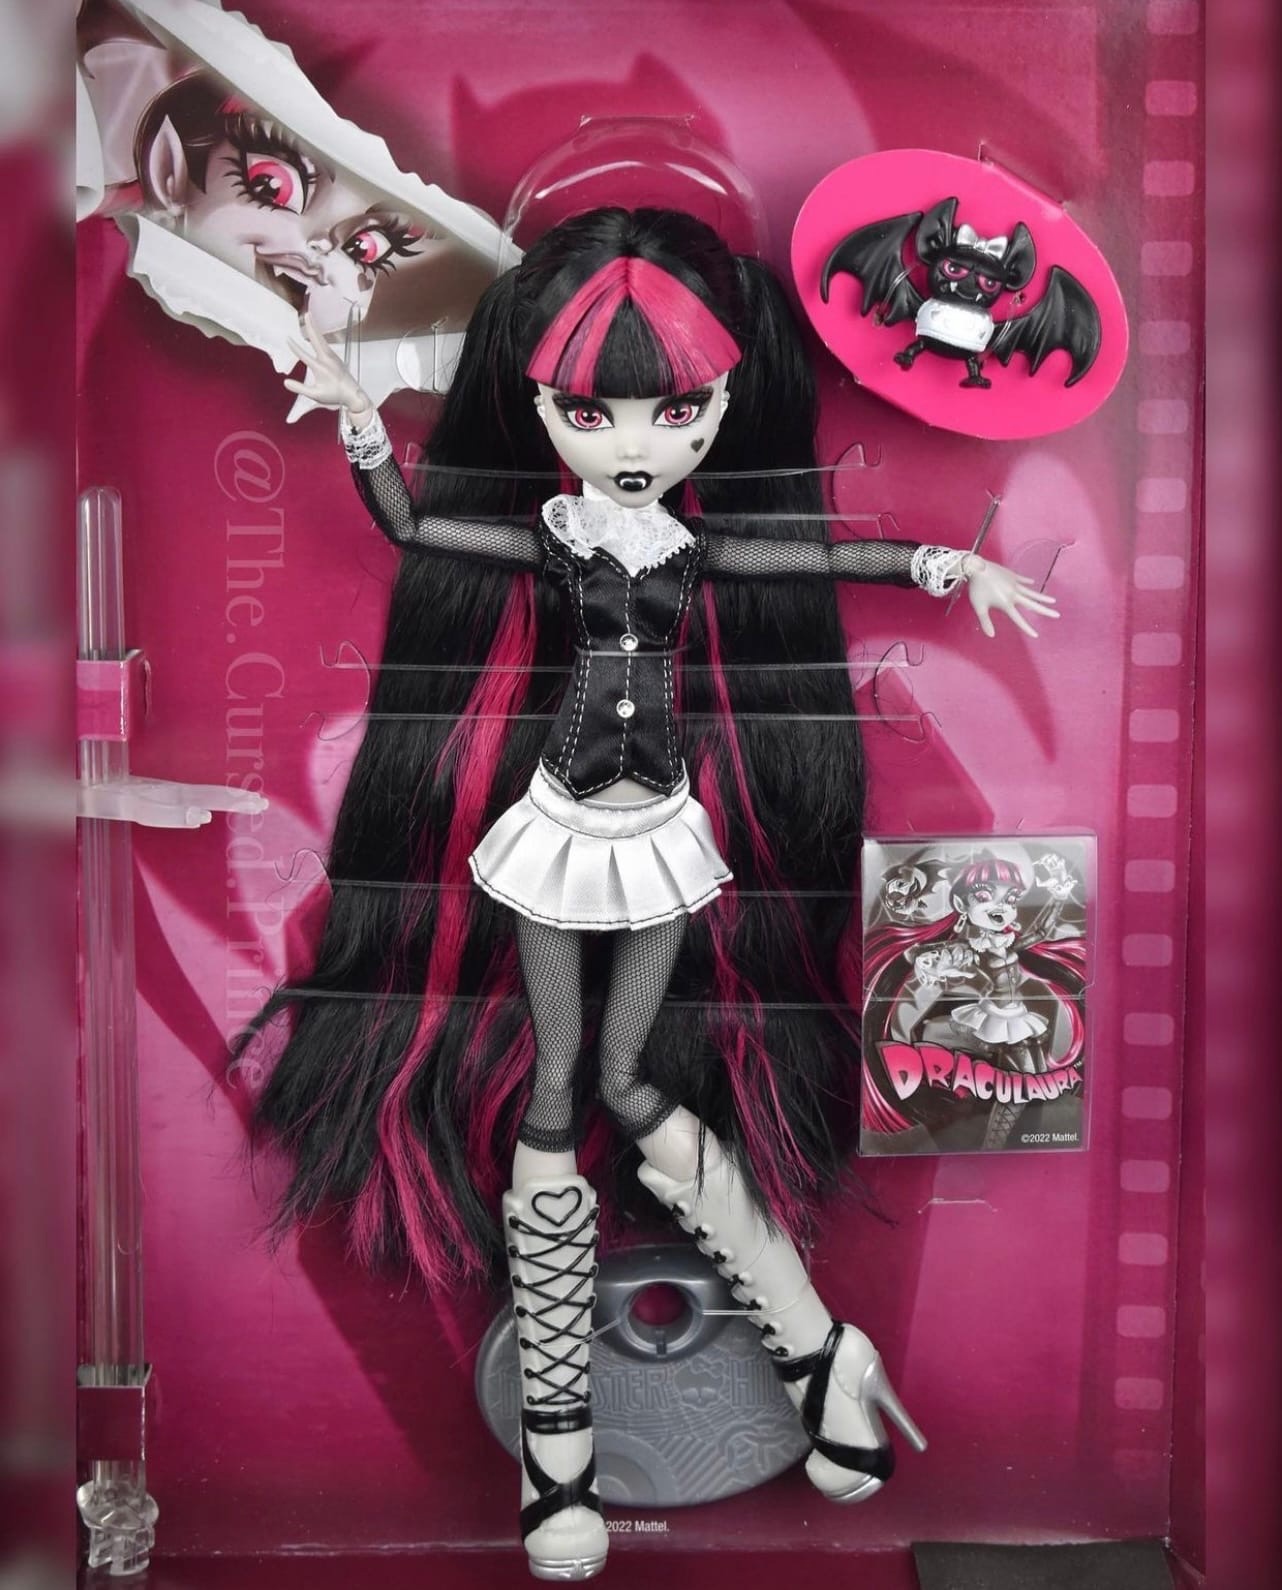 Monster High Reel Drama Draculaura - Dolls & Accessories